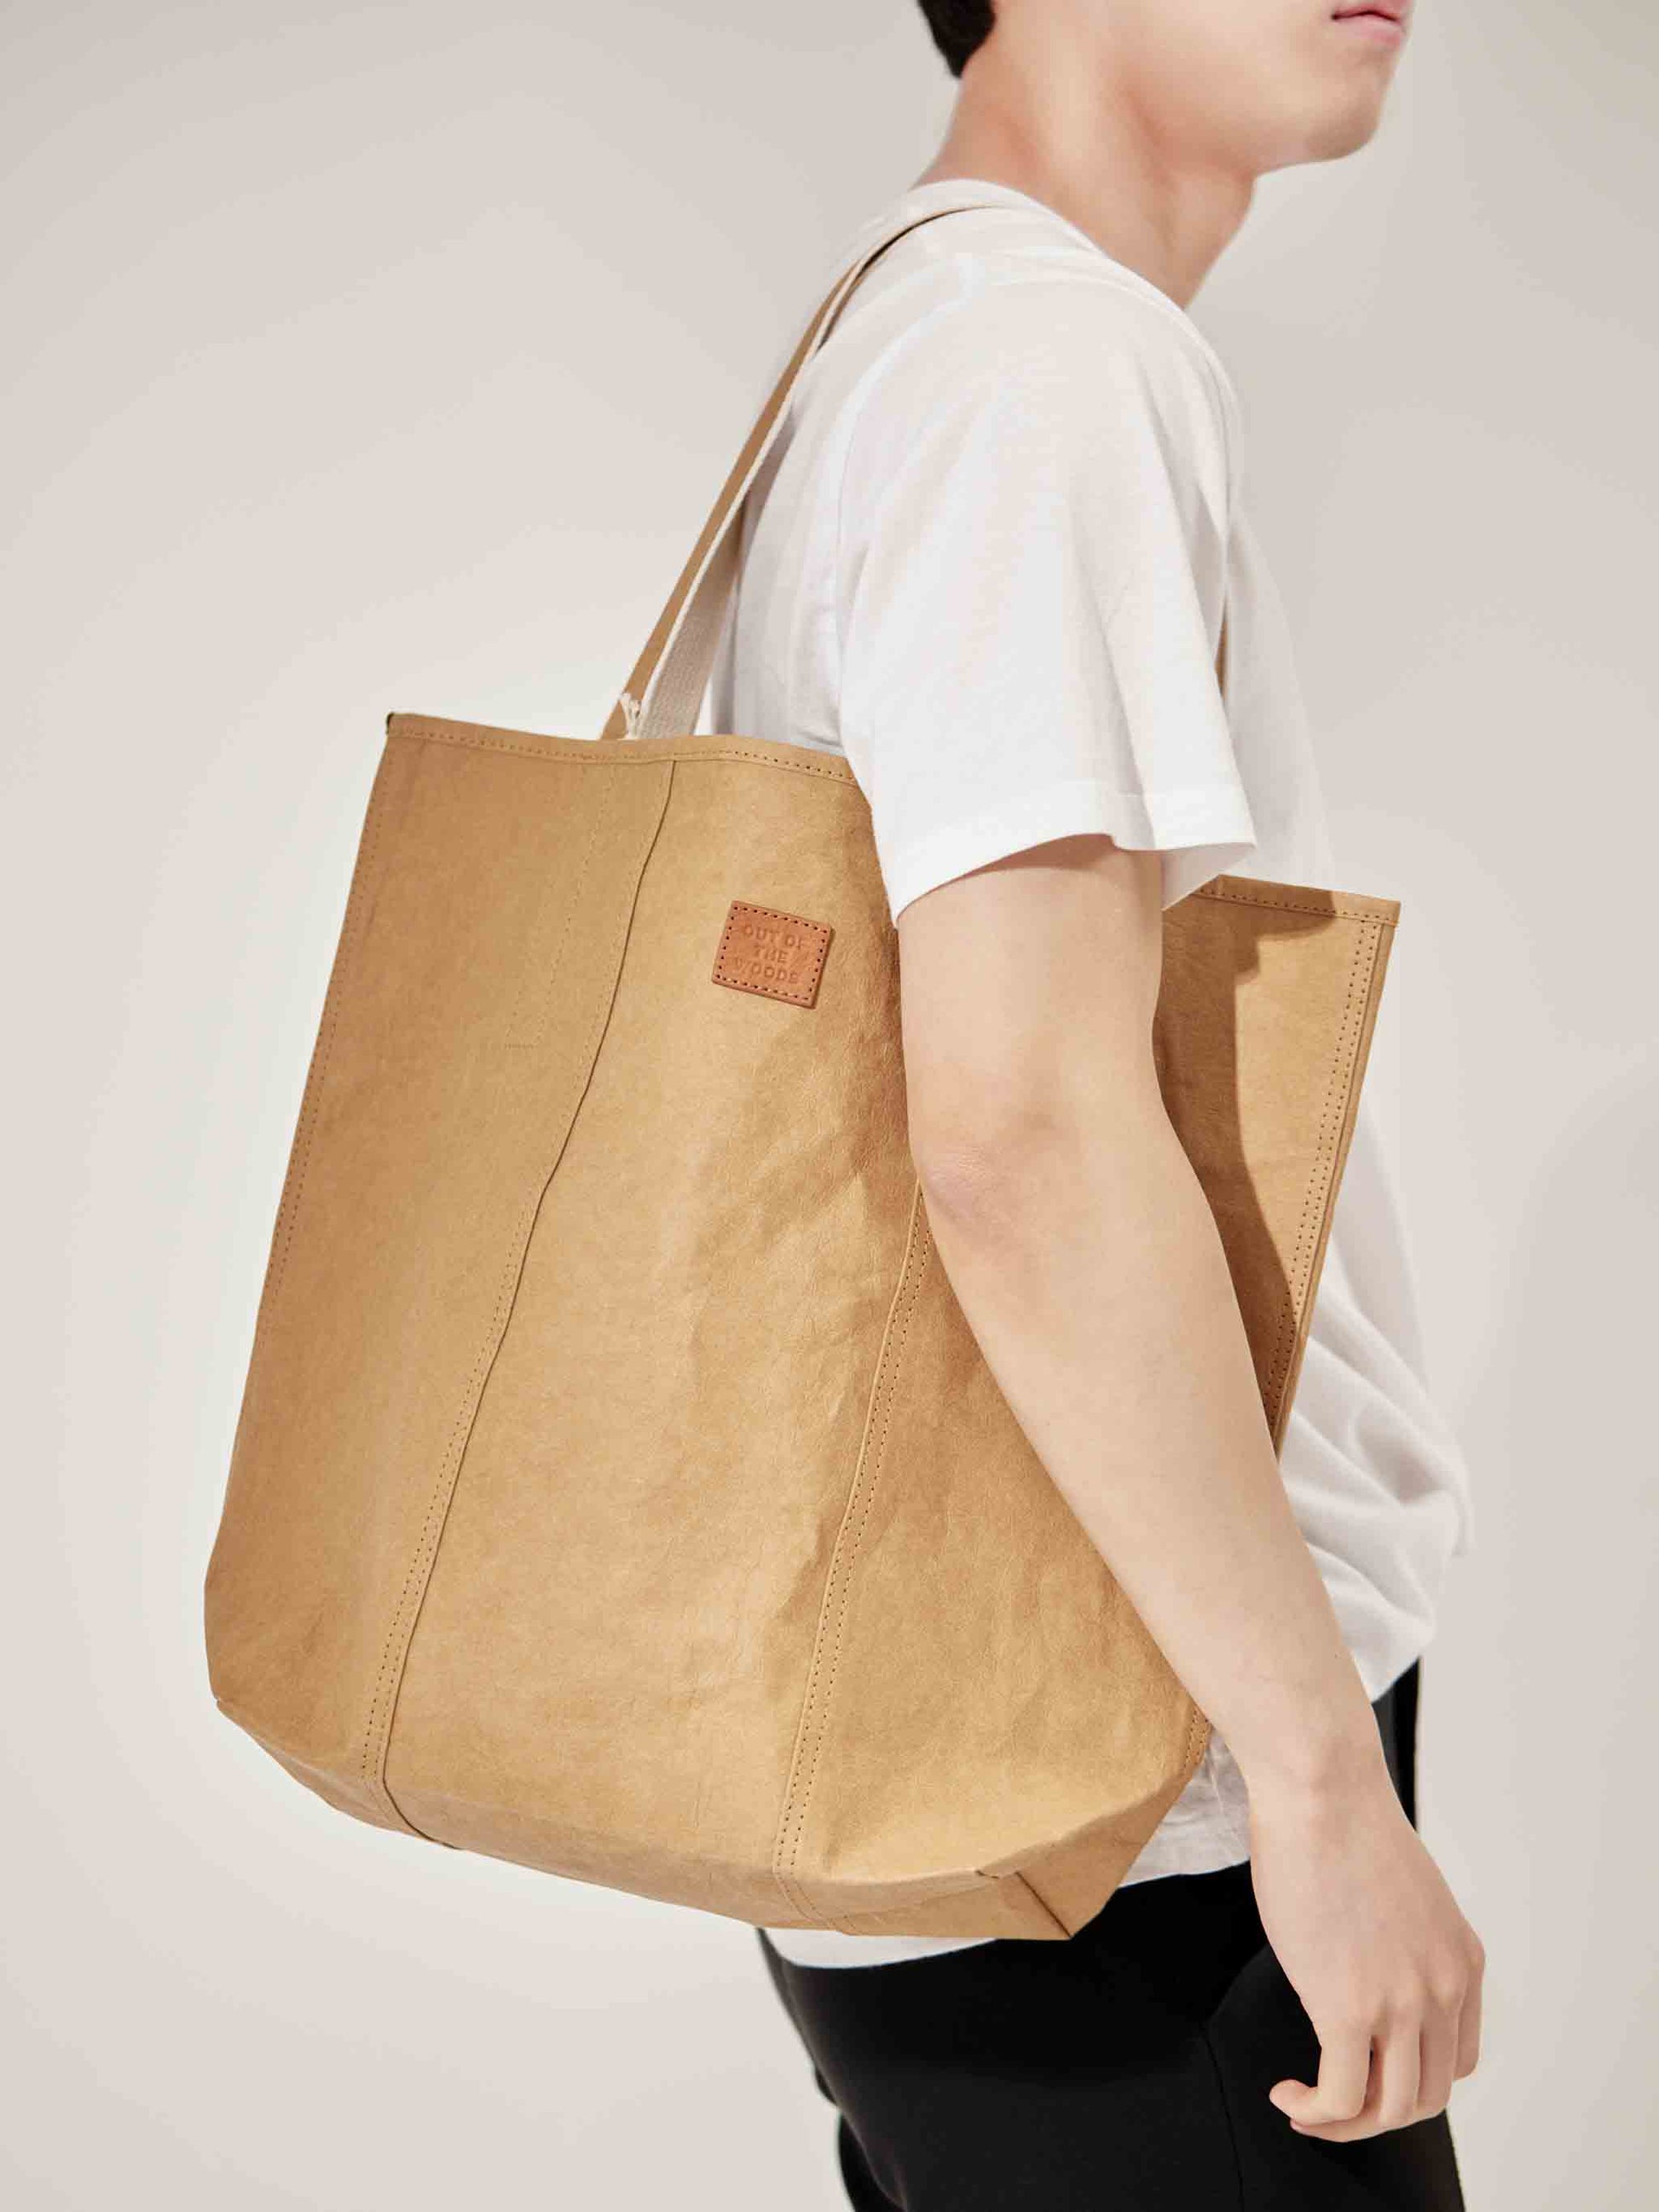 Tote Bags, Handbags, Shoulder Bags & Shoppers